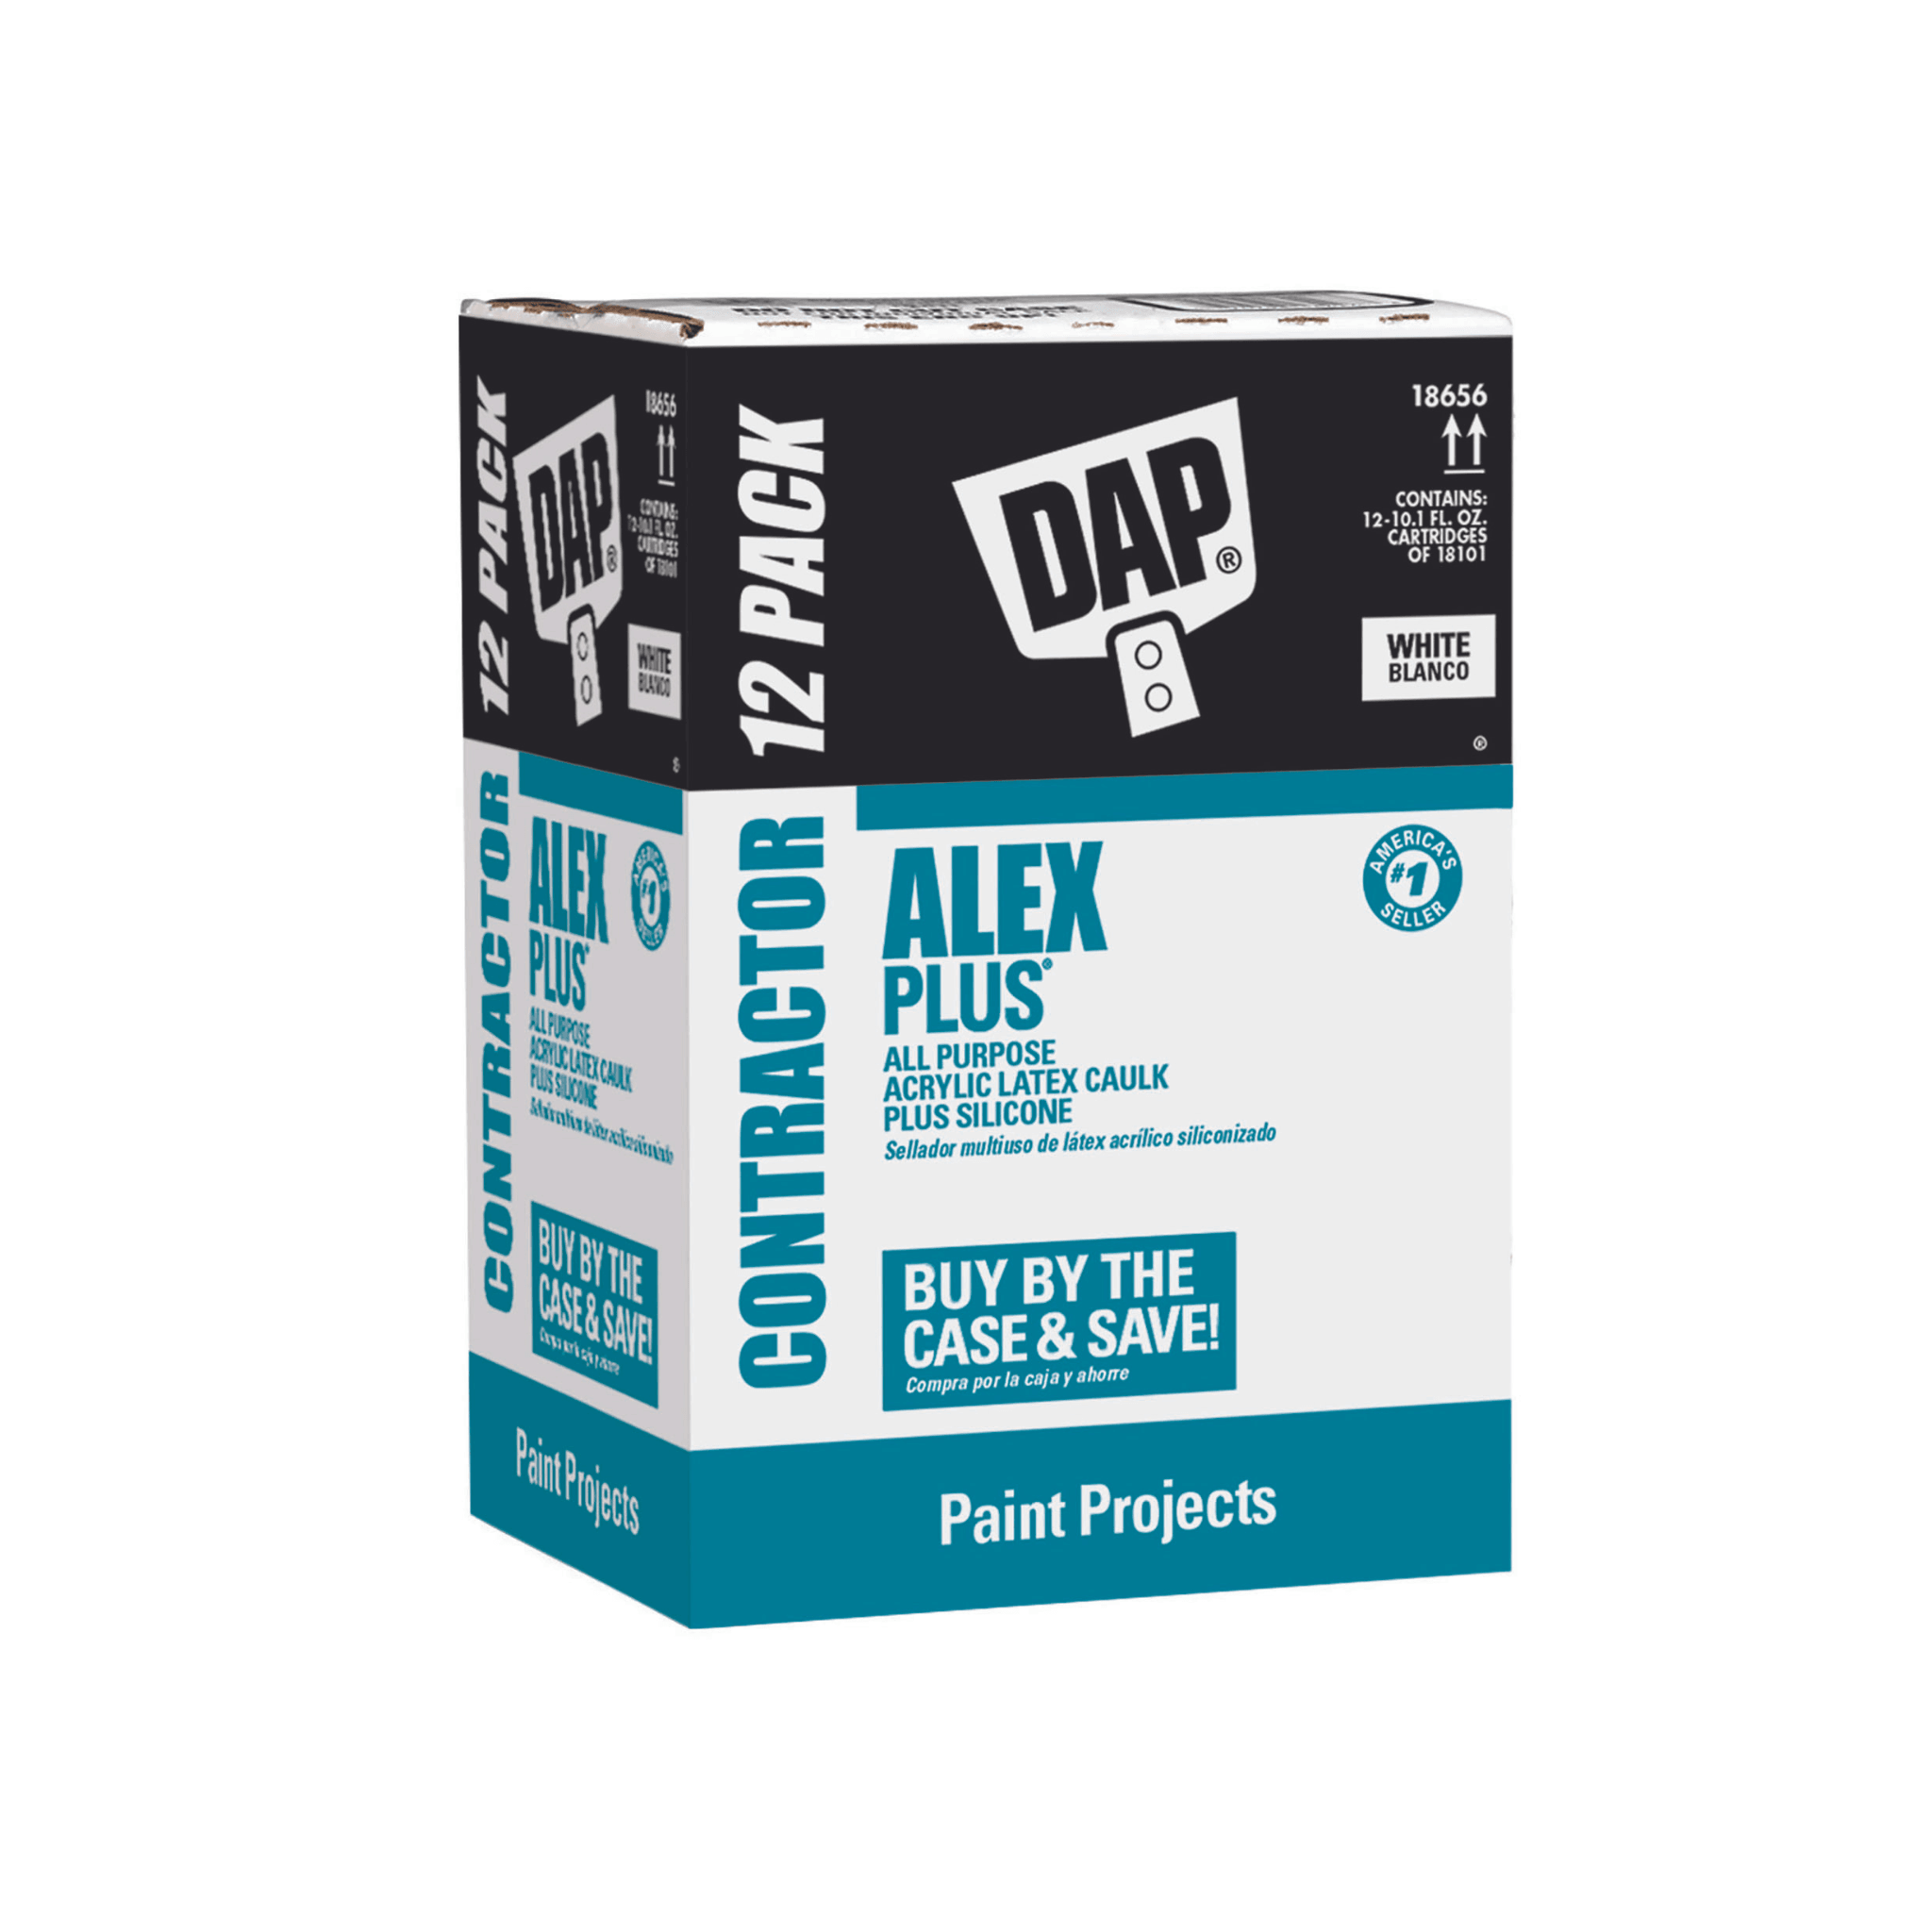 ALEX PLUS® All Purpose Acrylic Latex Caulk Plus Silicone - Direct Stone Tool Supply, Inc